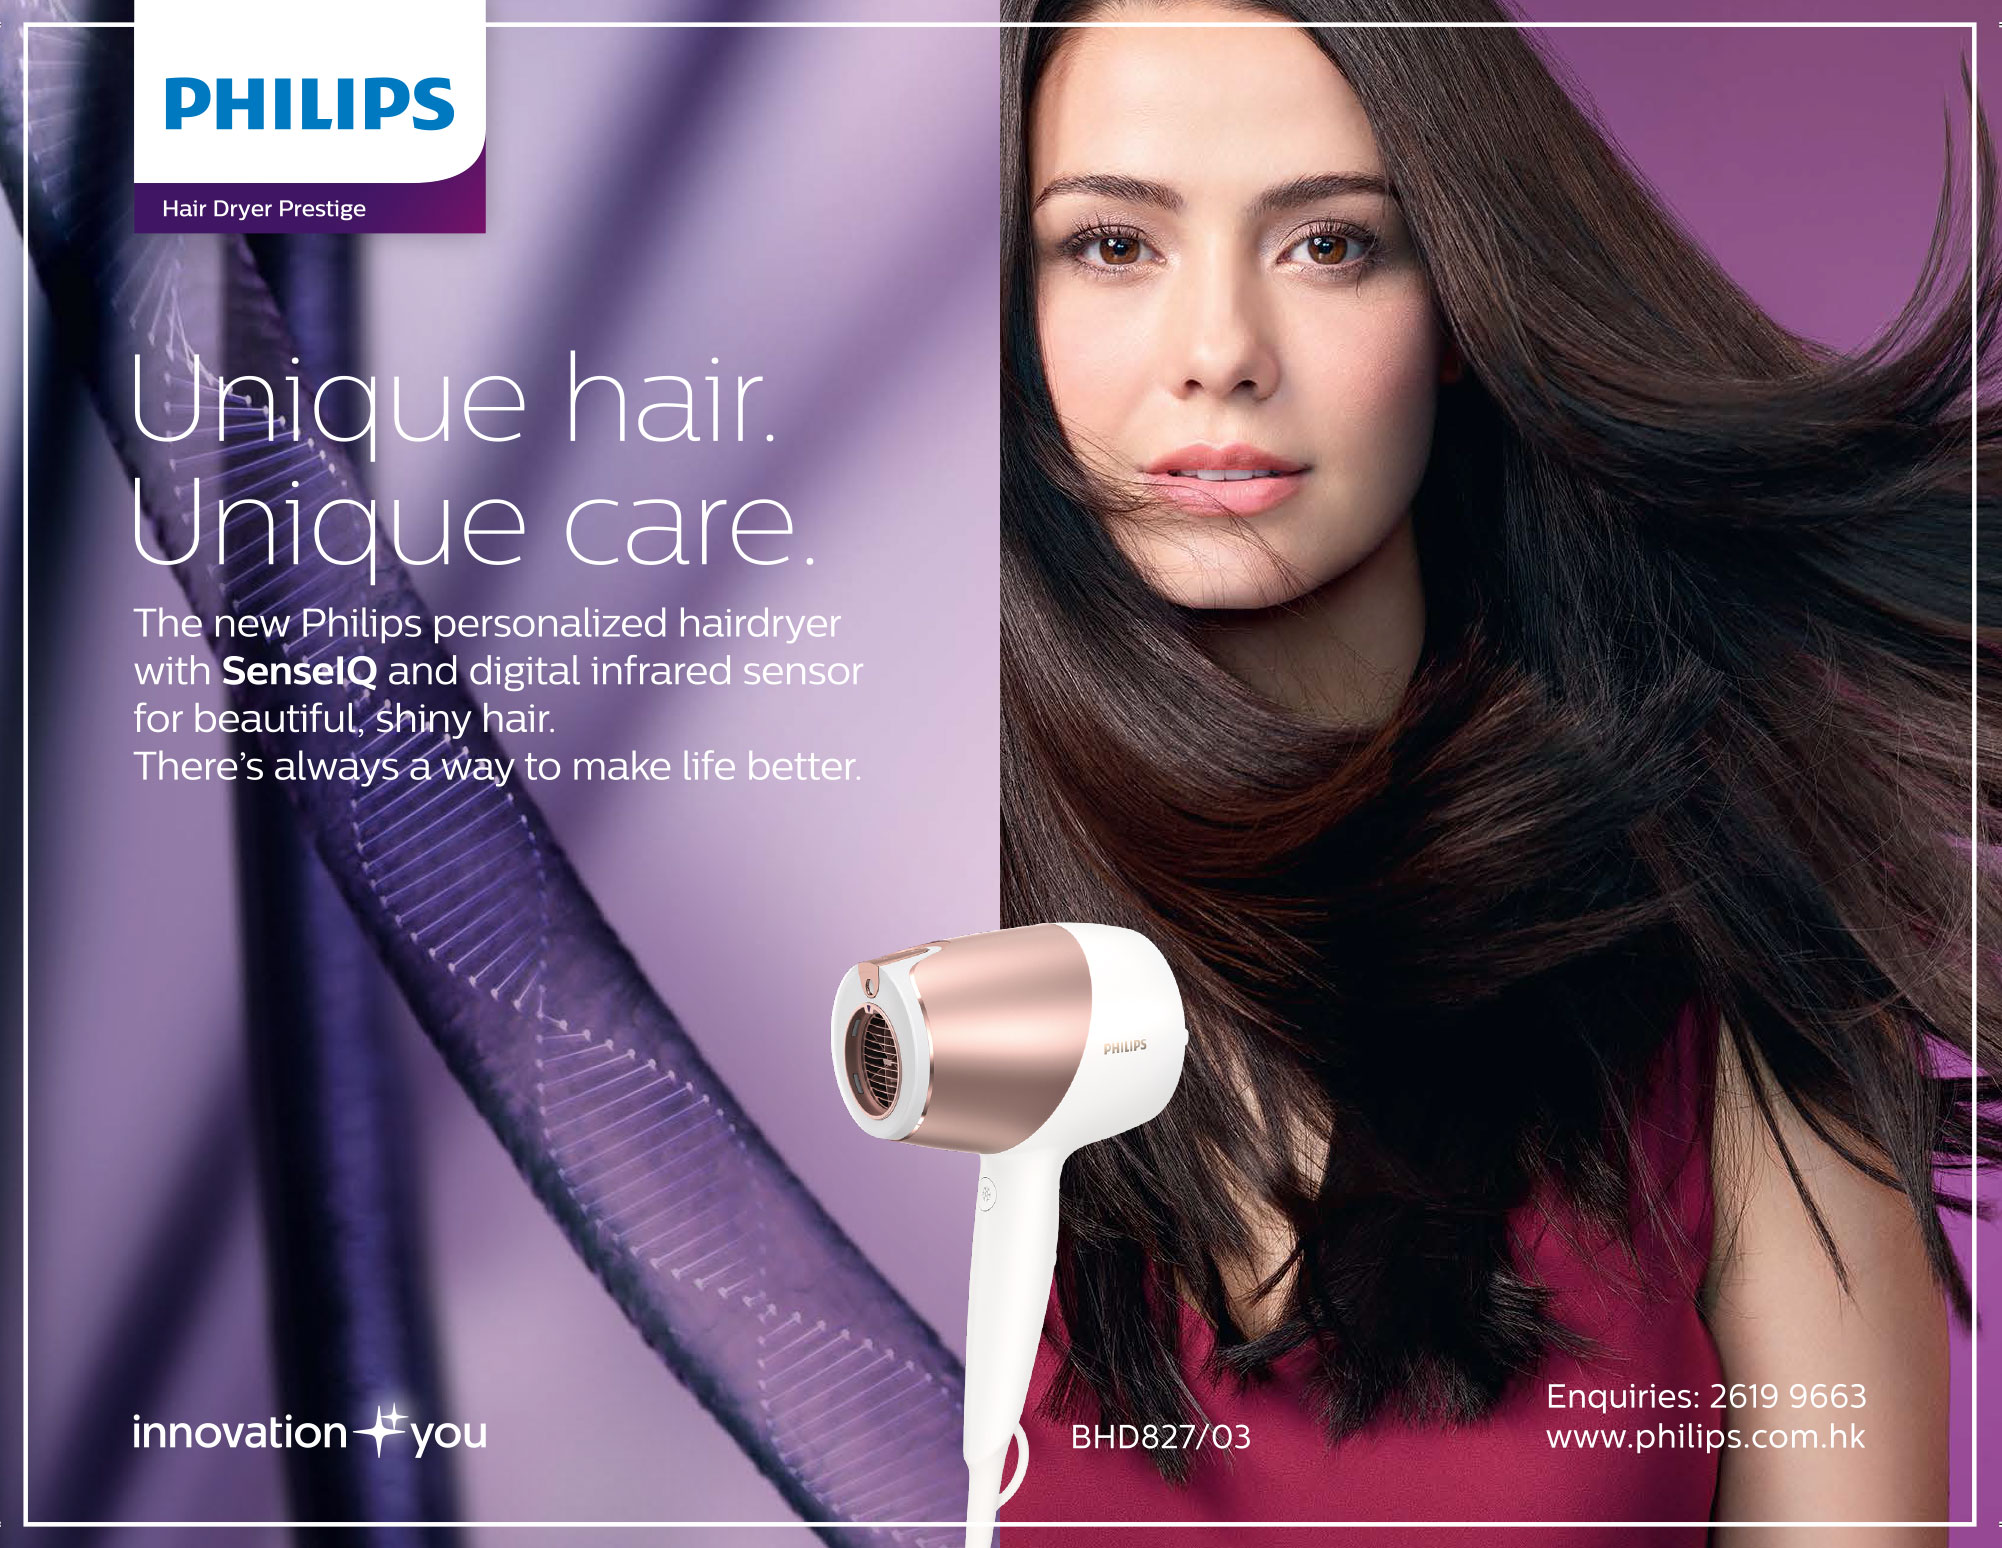 Philips sponsor ad